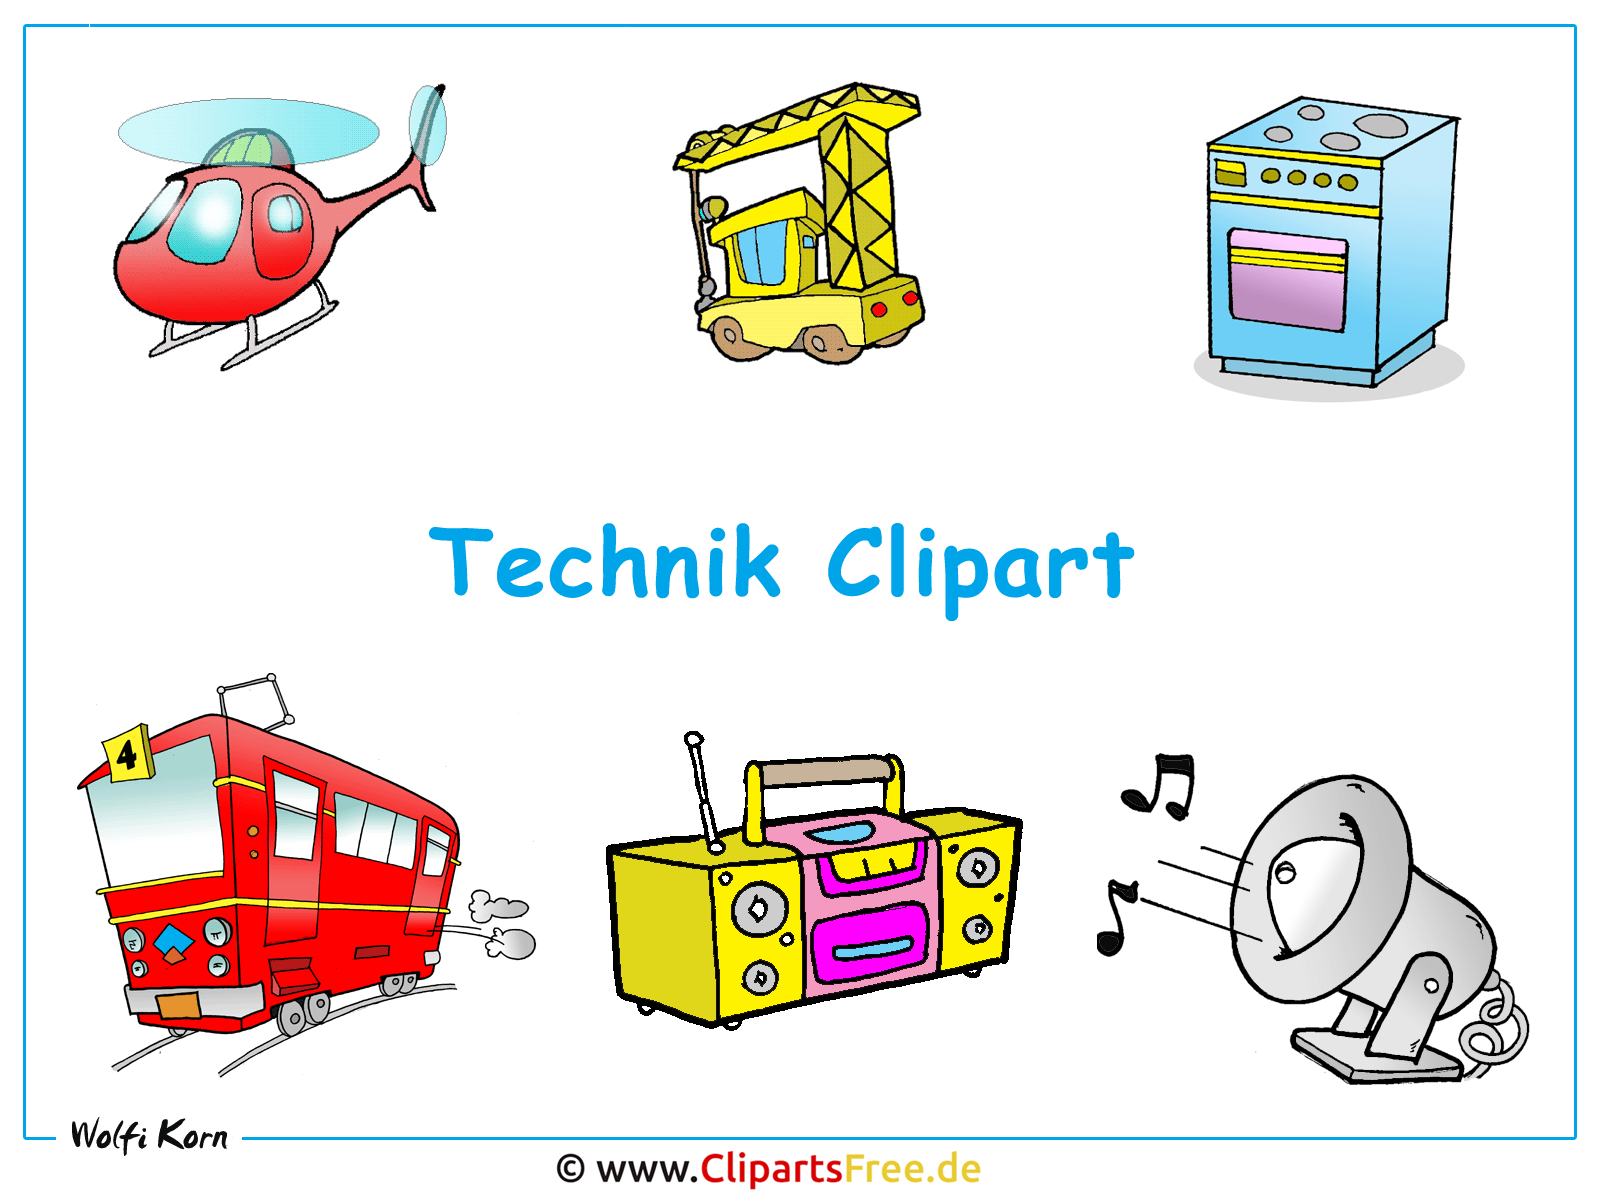 cliparts technik - photo #1